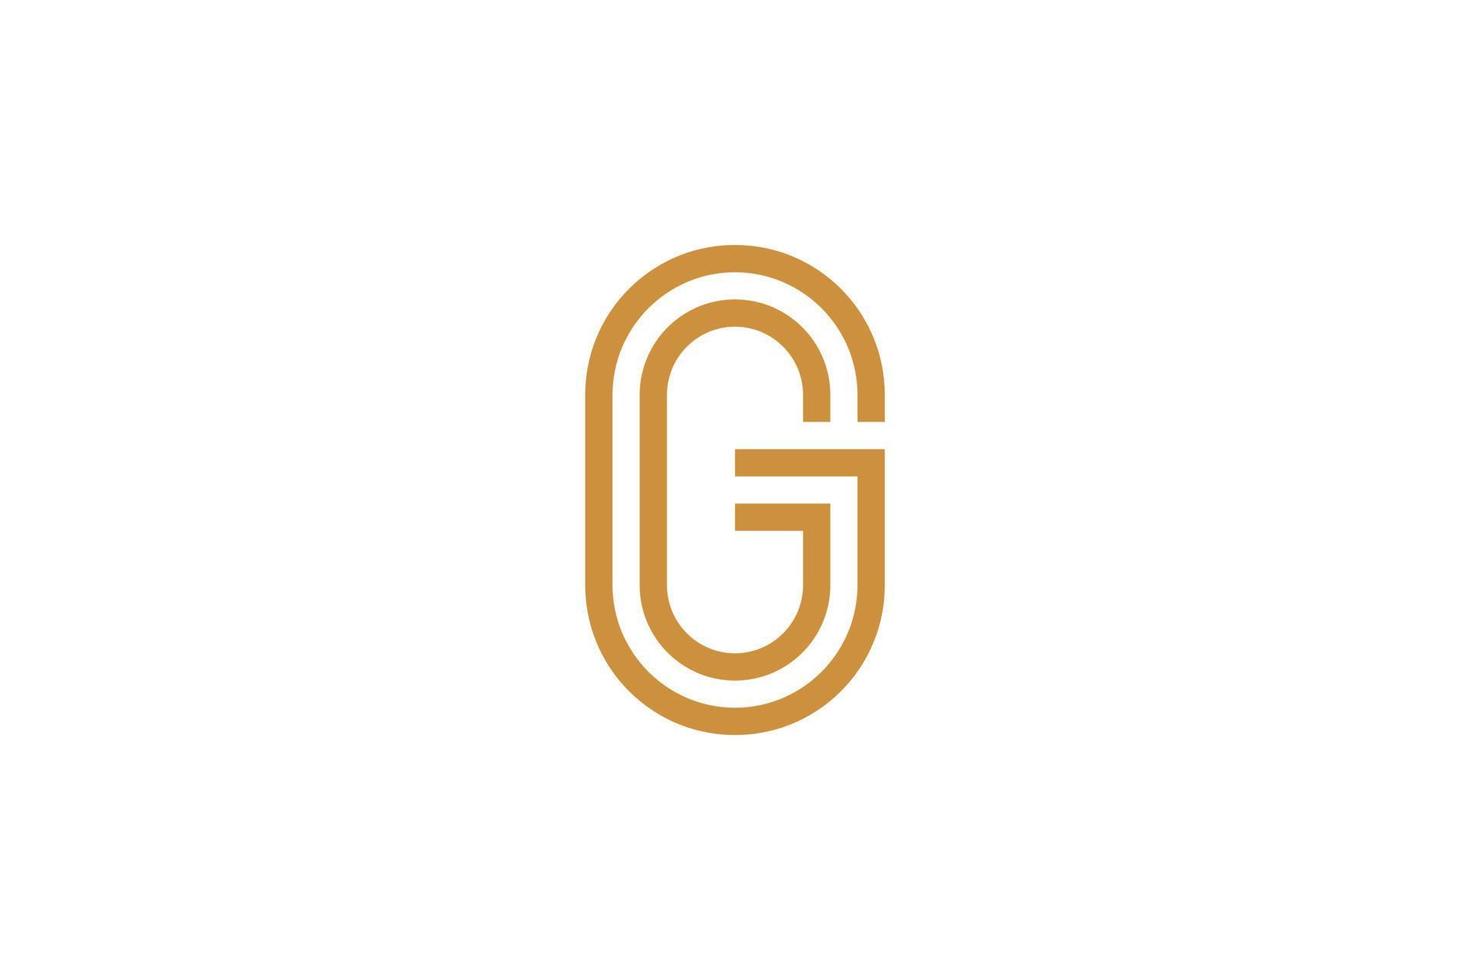 modelos criativos de logotipos da letra g vetor